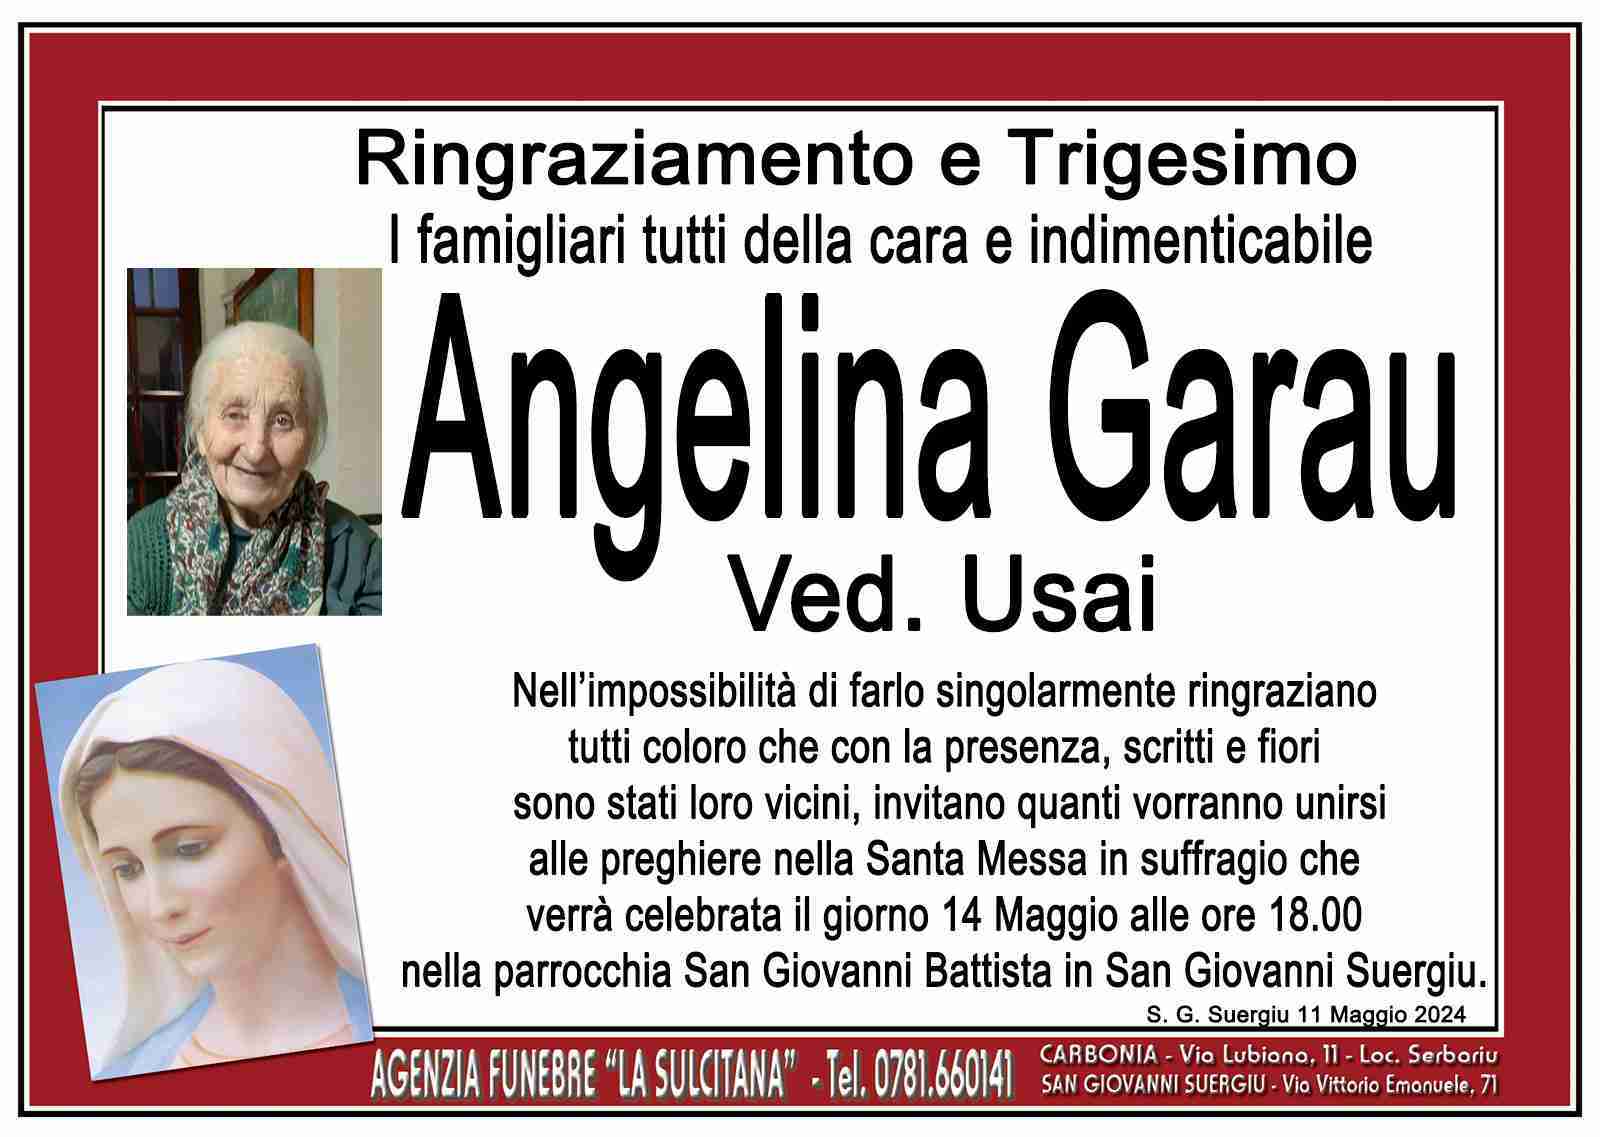 Angelina Garau